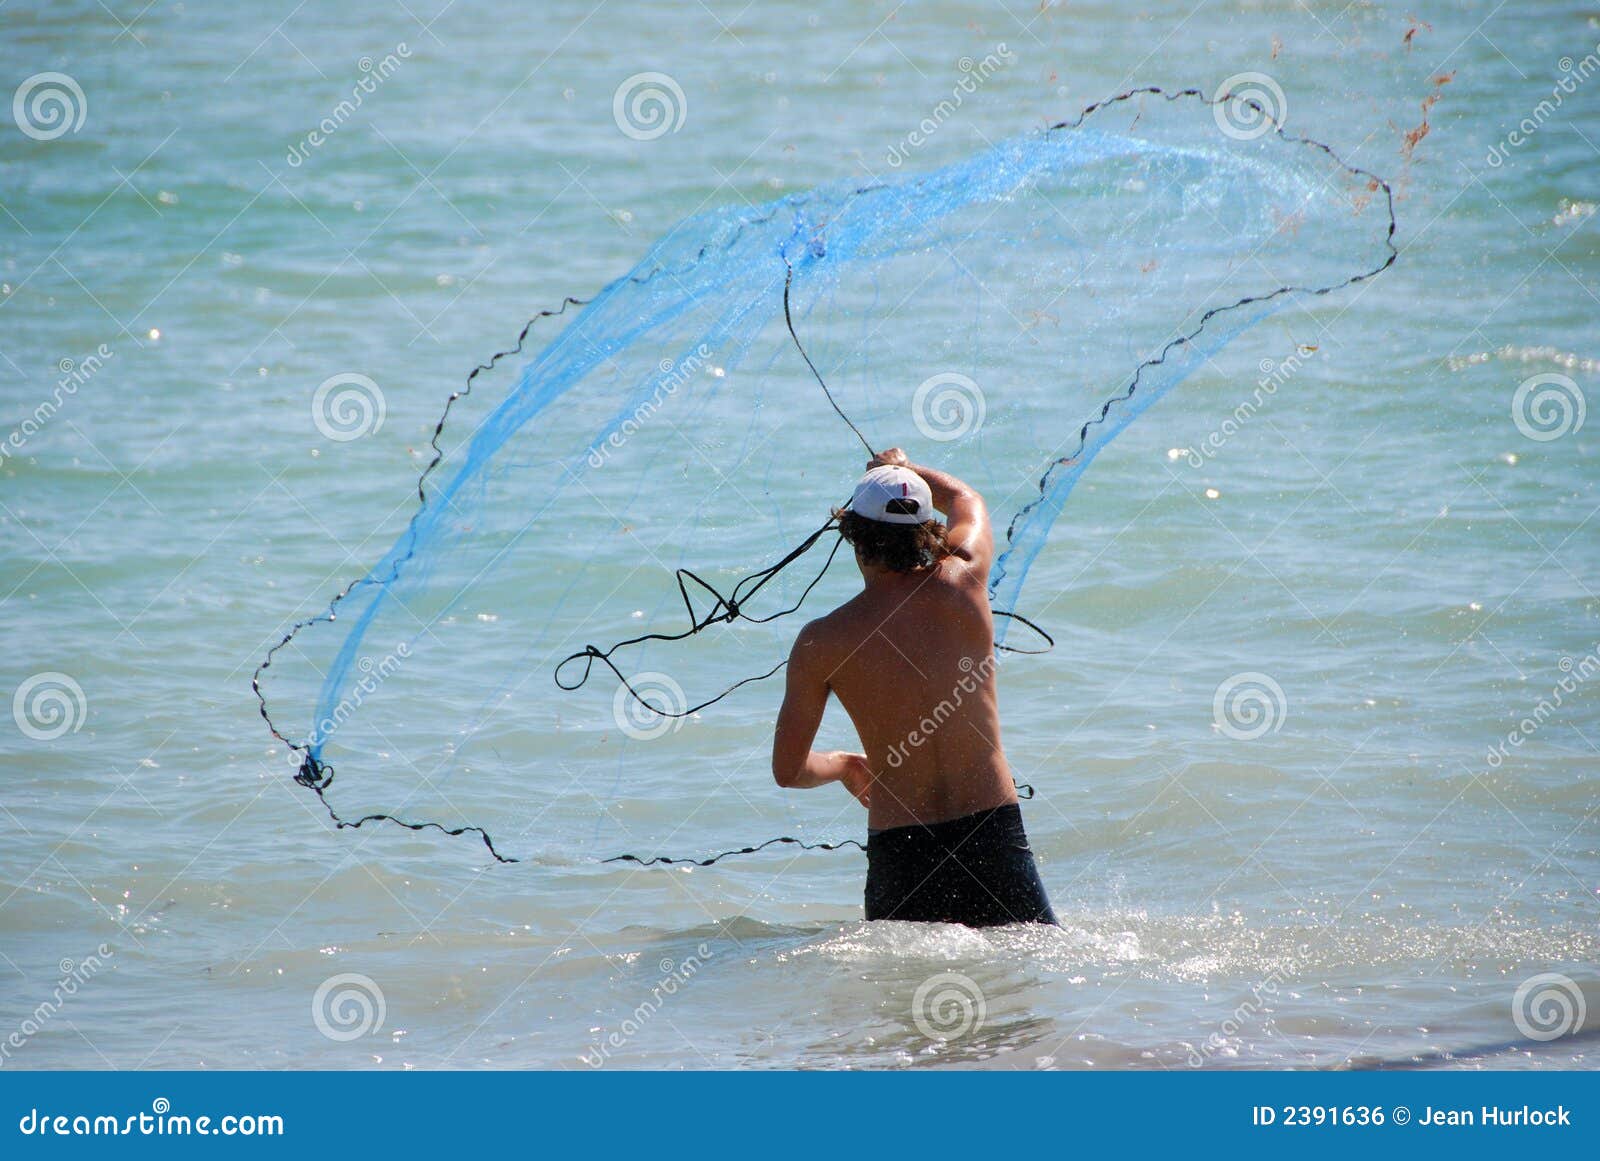 Cast net throw stock photo. Image of nylon, shore, lone - 2391636